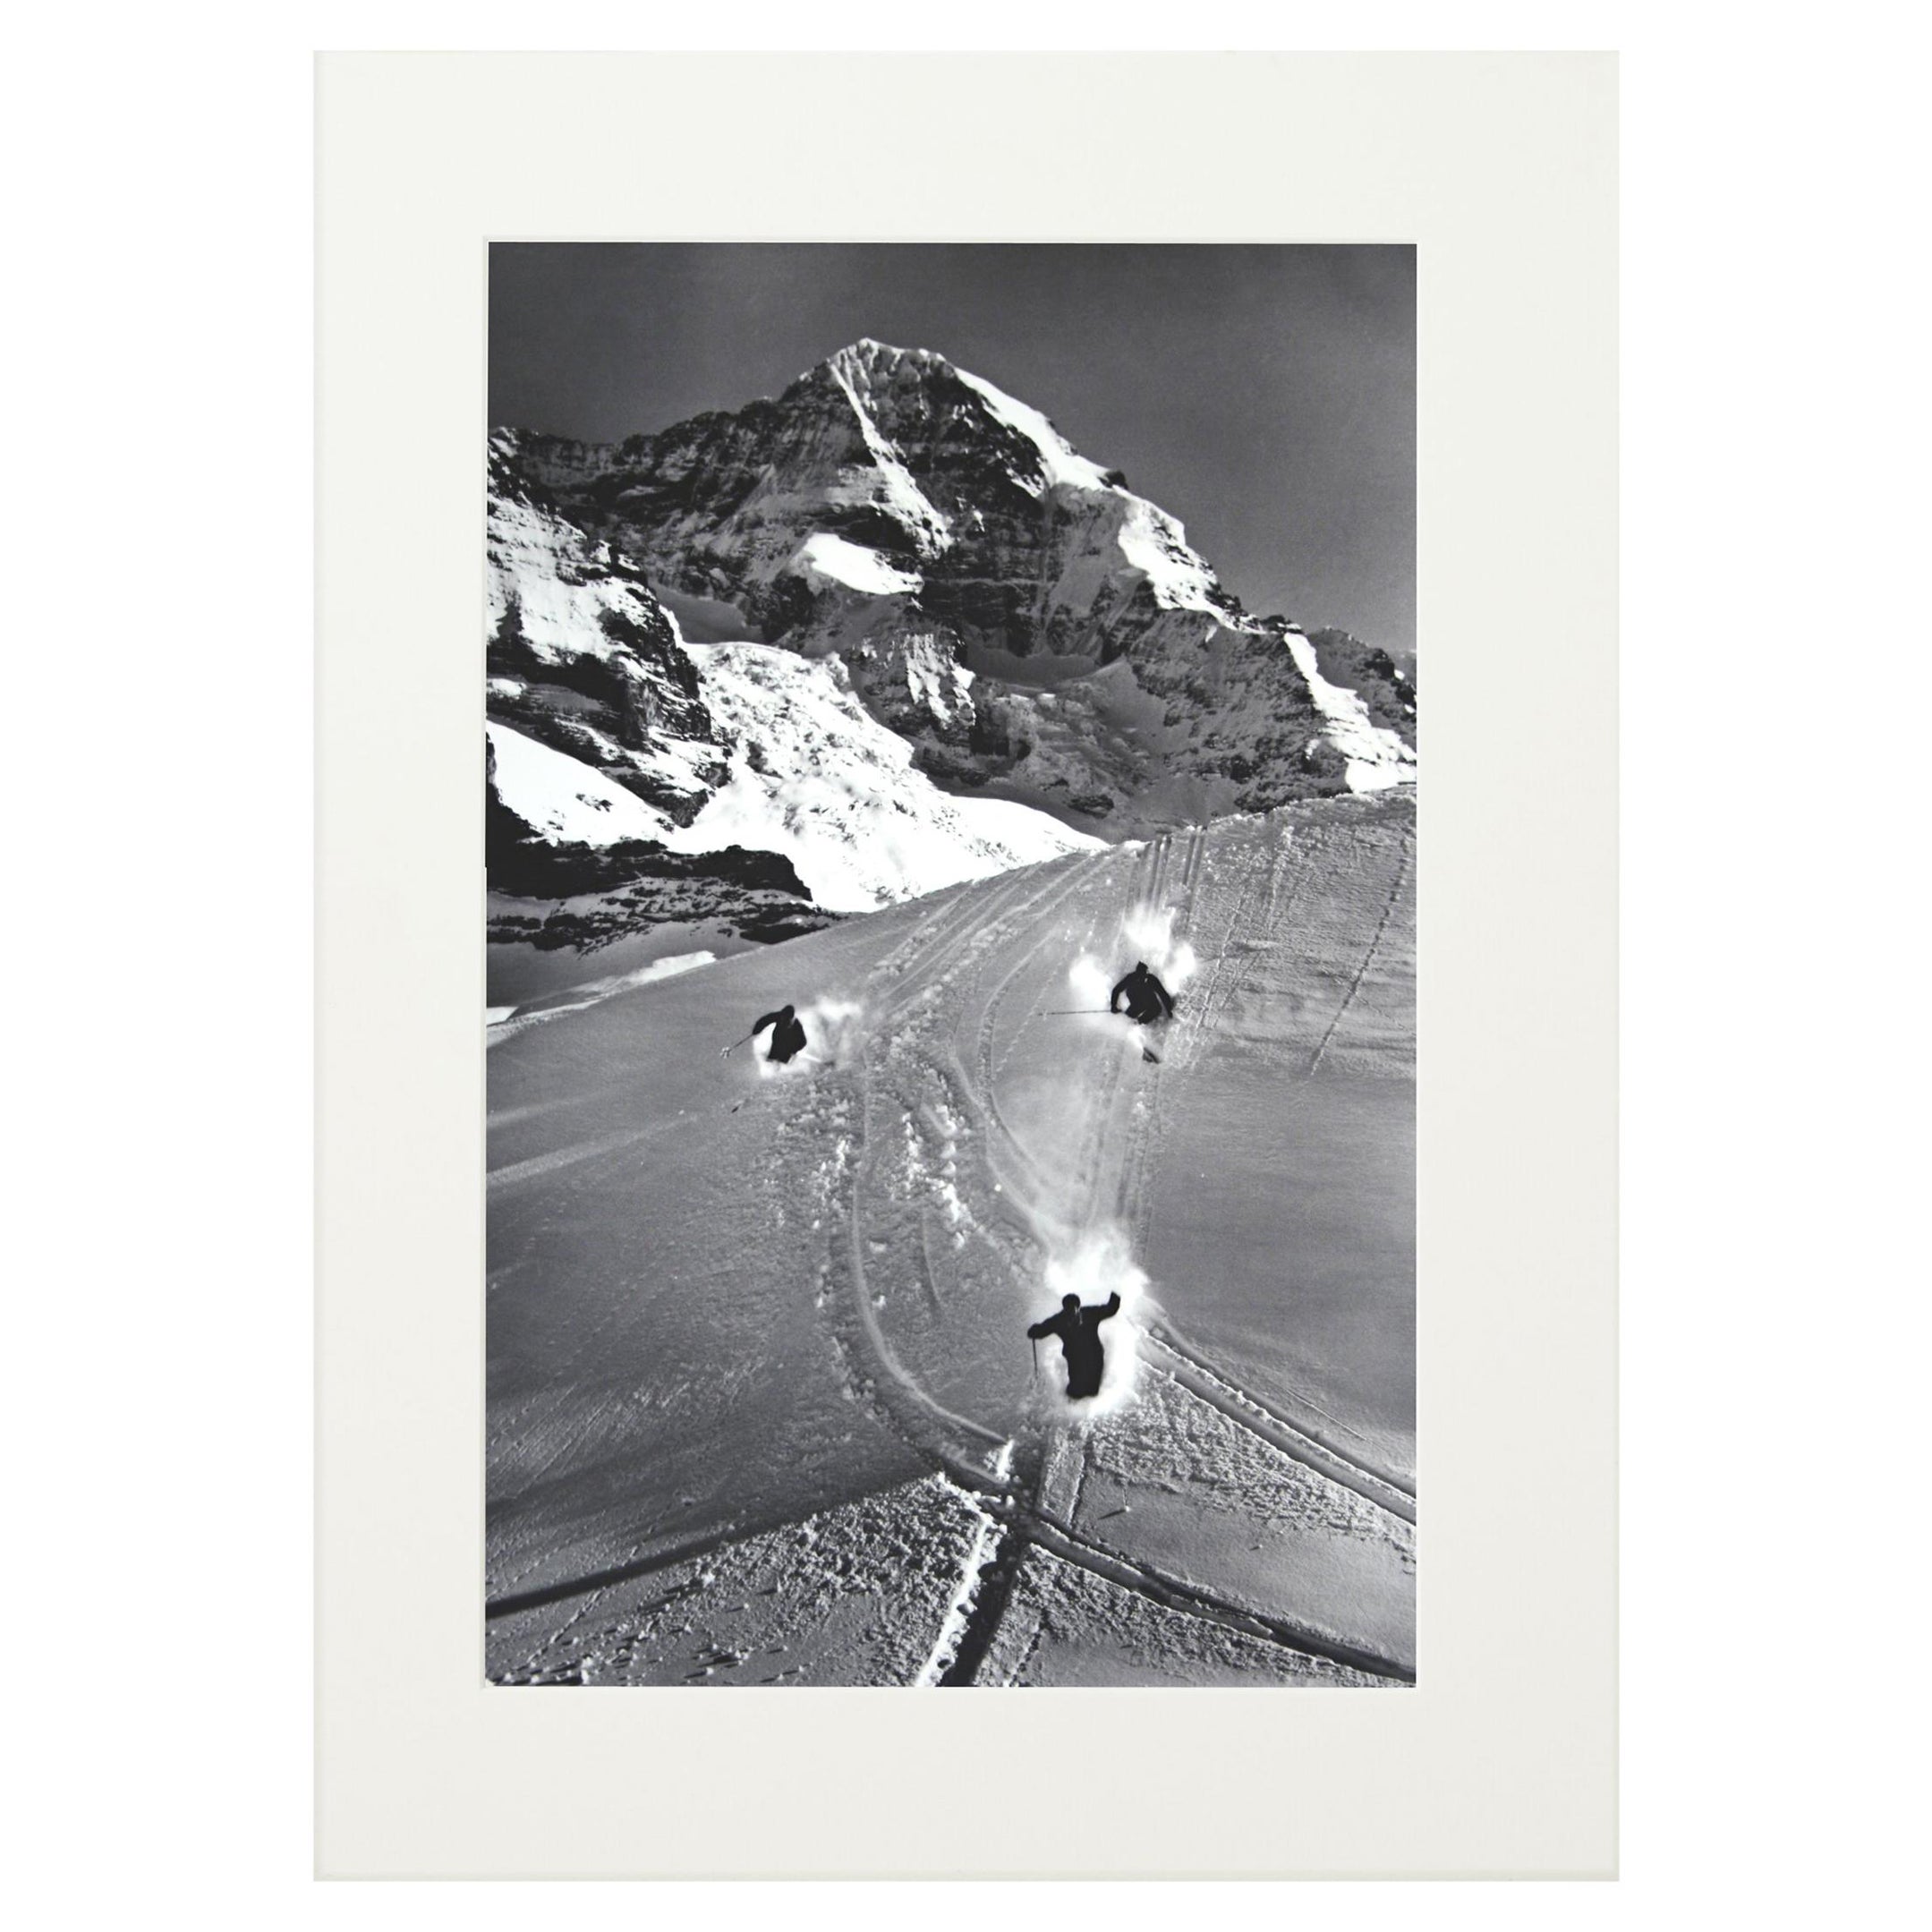 Alpine Ski Photograph, 'Scheidegg' Taken from Original 1930s Photograph